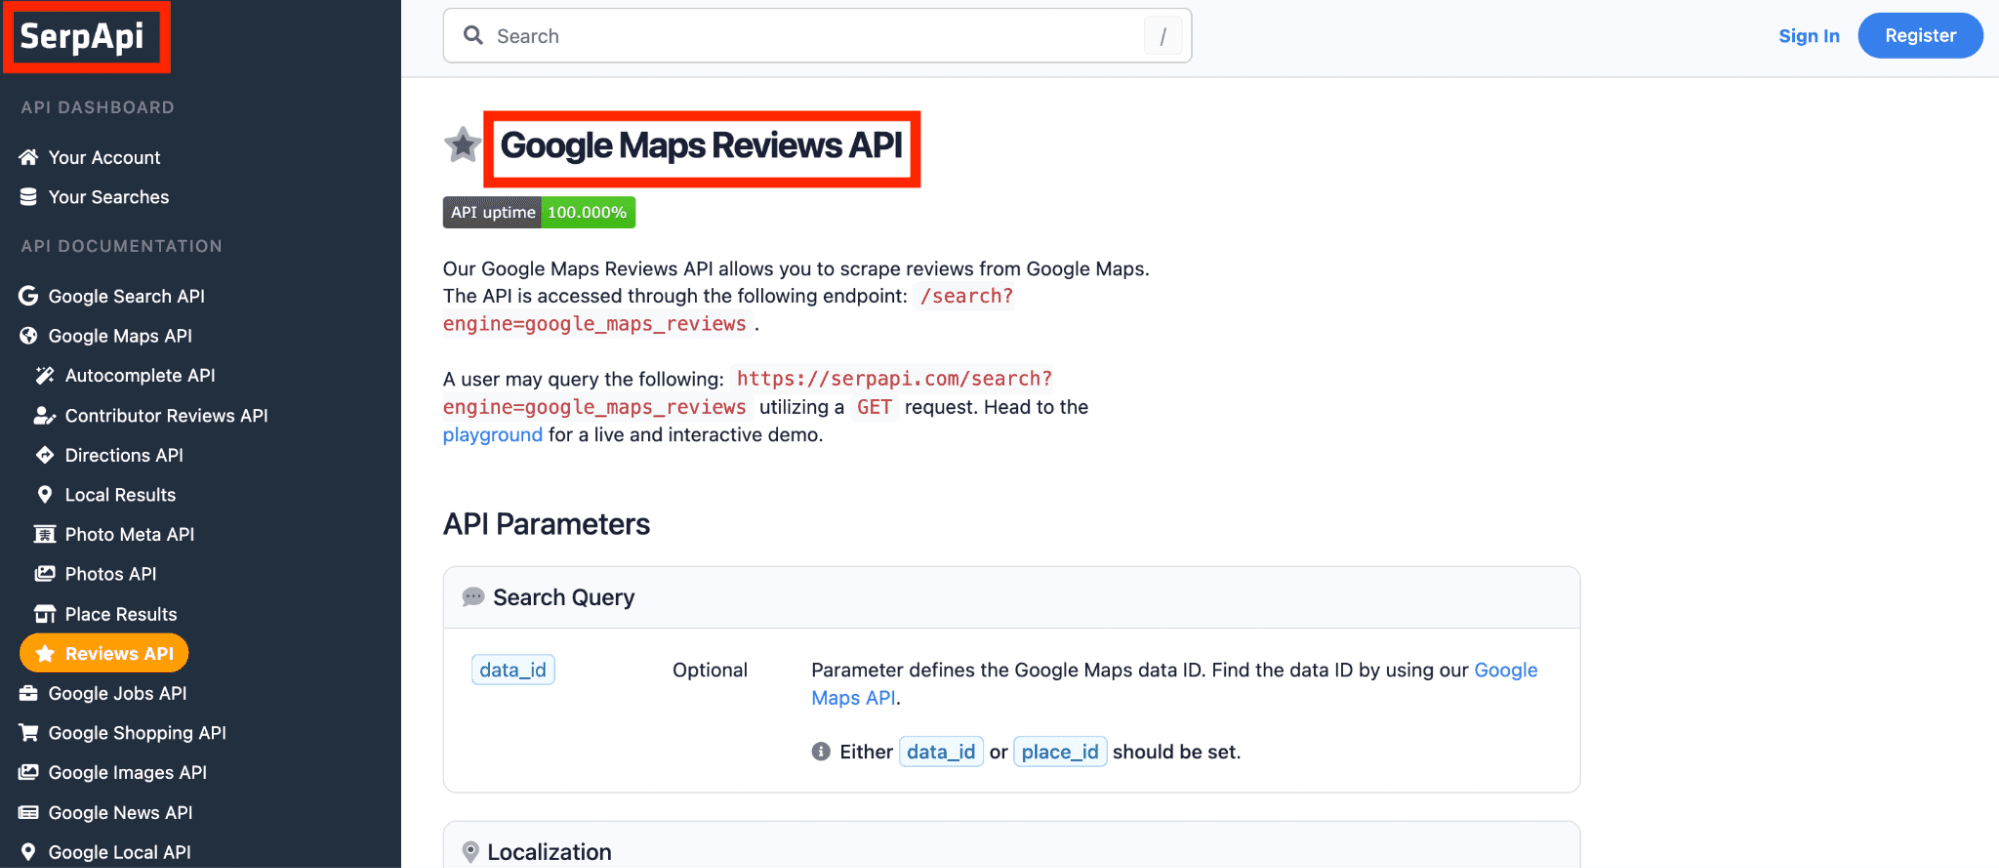 google maps reviews api serpapi - image19.png